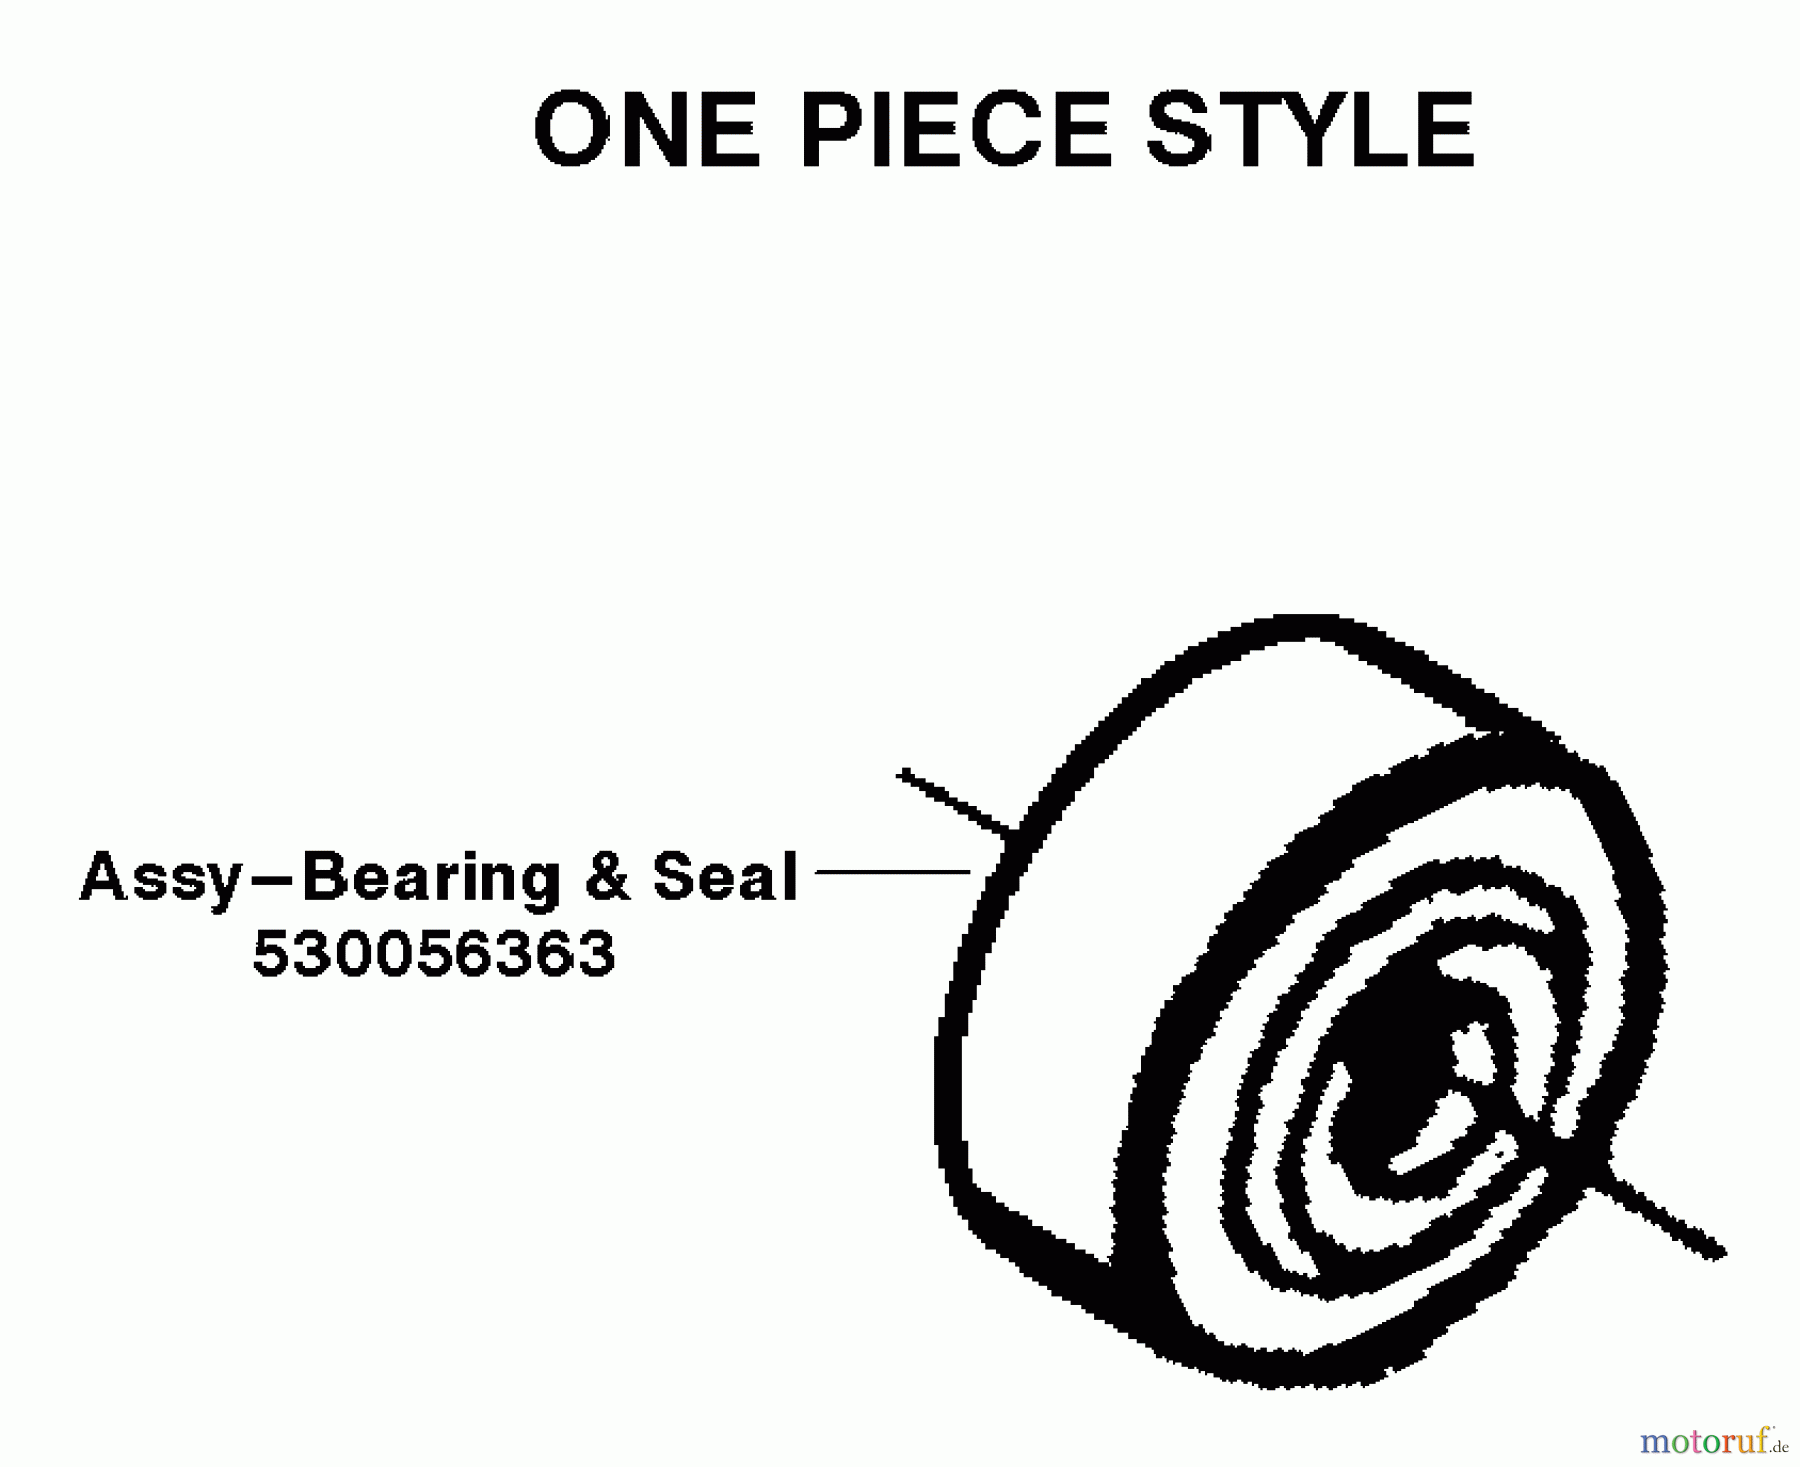  Poulan / Weed Eater Motorsägen 2900 (Type 3) - Poulan Chainsaw Bearing & Seal - One Piece Style